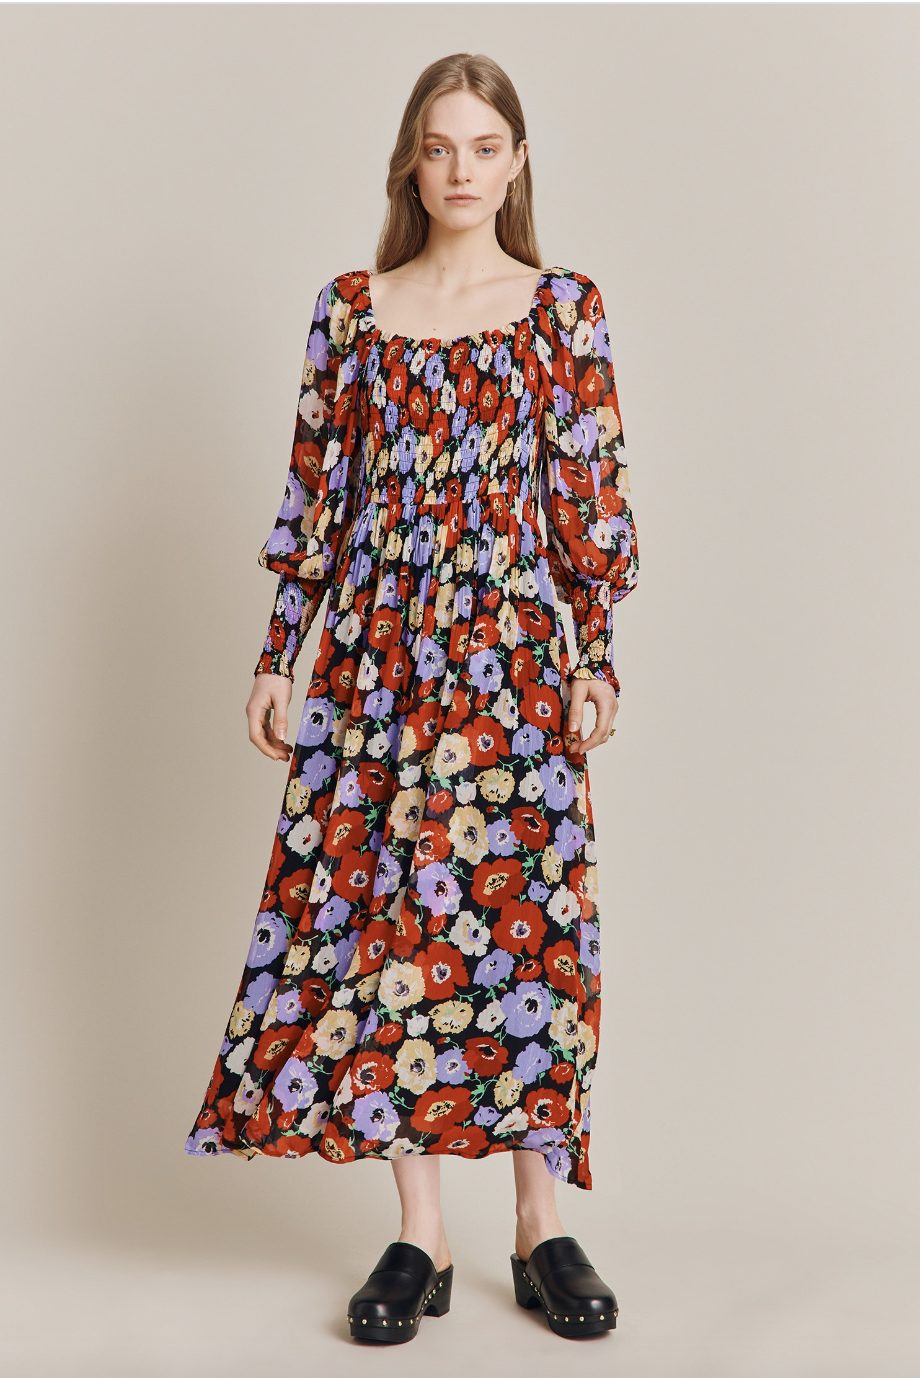 Kristie Black Poppies Midi Dress